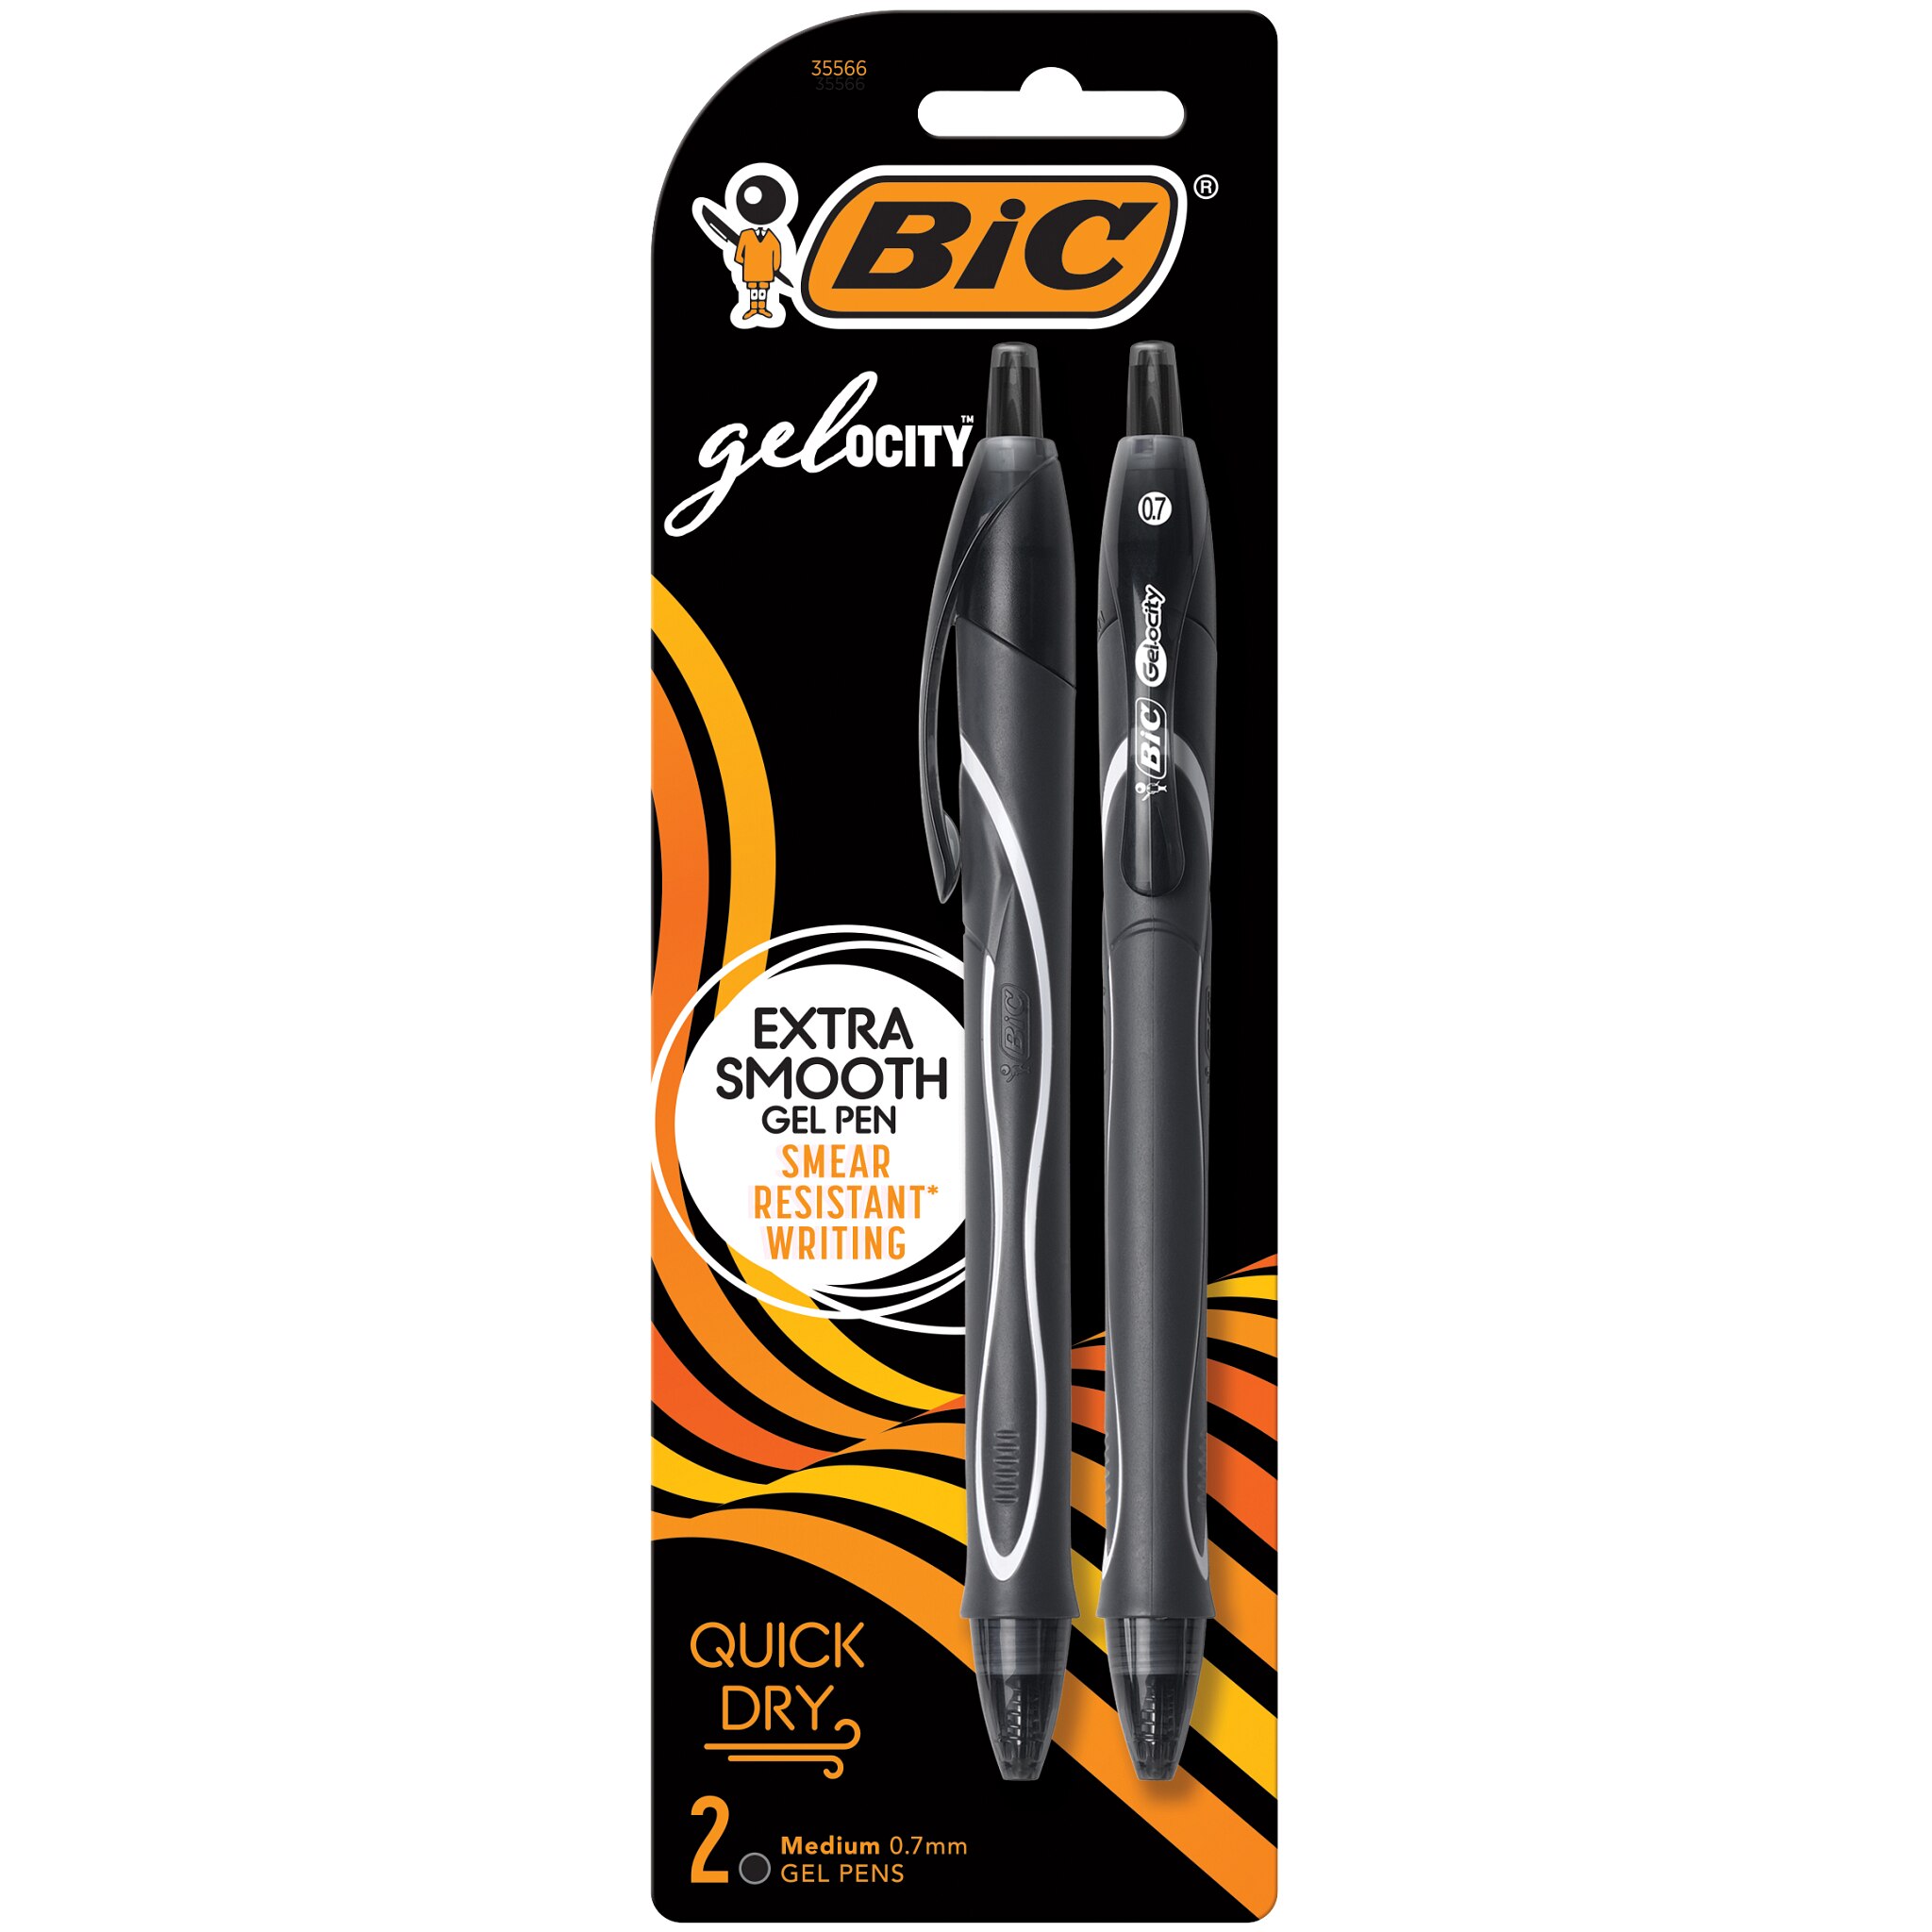 BIC Gel-ocity Quick Dry Gel Pen, Medium Point, Black, 2 ct | CVS -  RGLCGP21-BLK